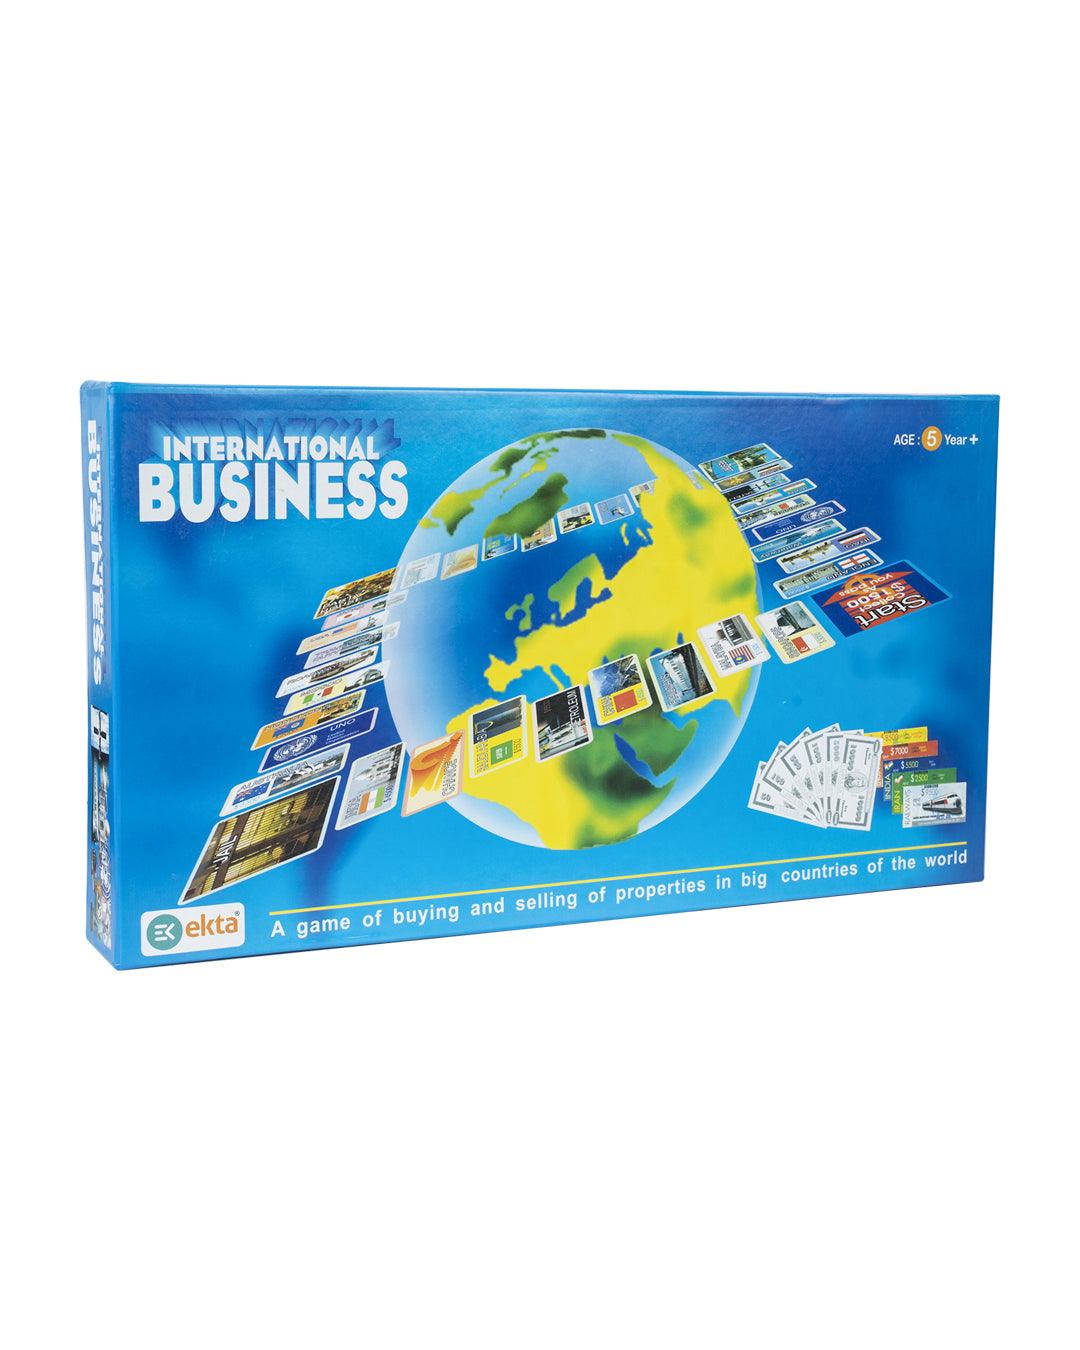 EKTA International Business Play Game - For Child Age 5 & Up - MARKET 99